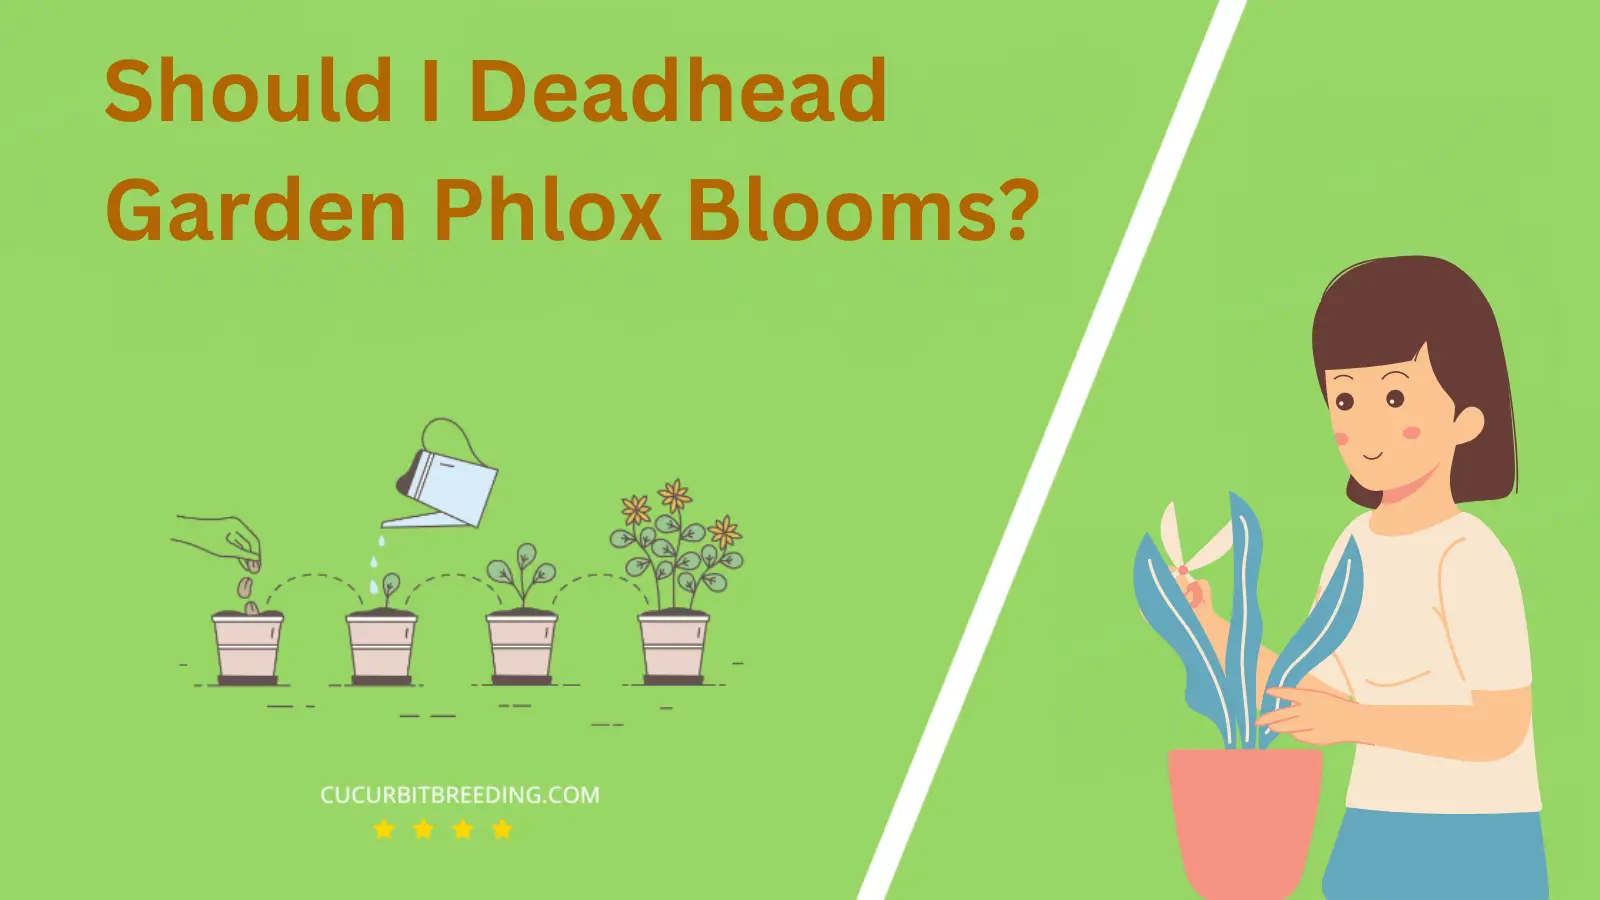 Should I Deadhead Garden Phlox Blooms?